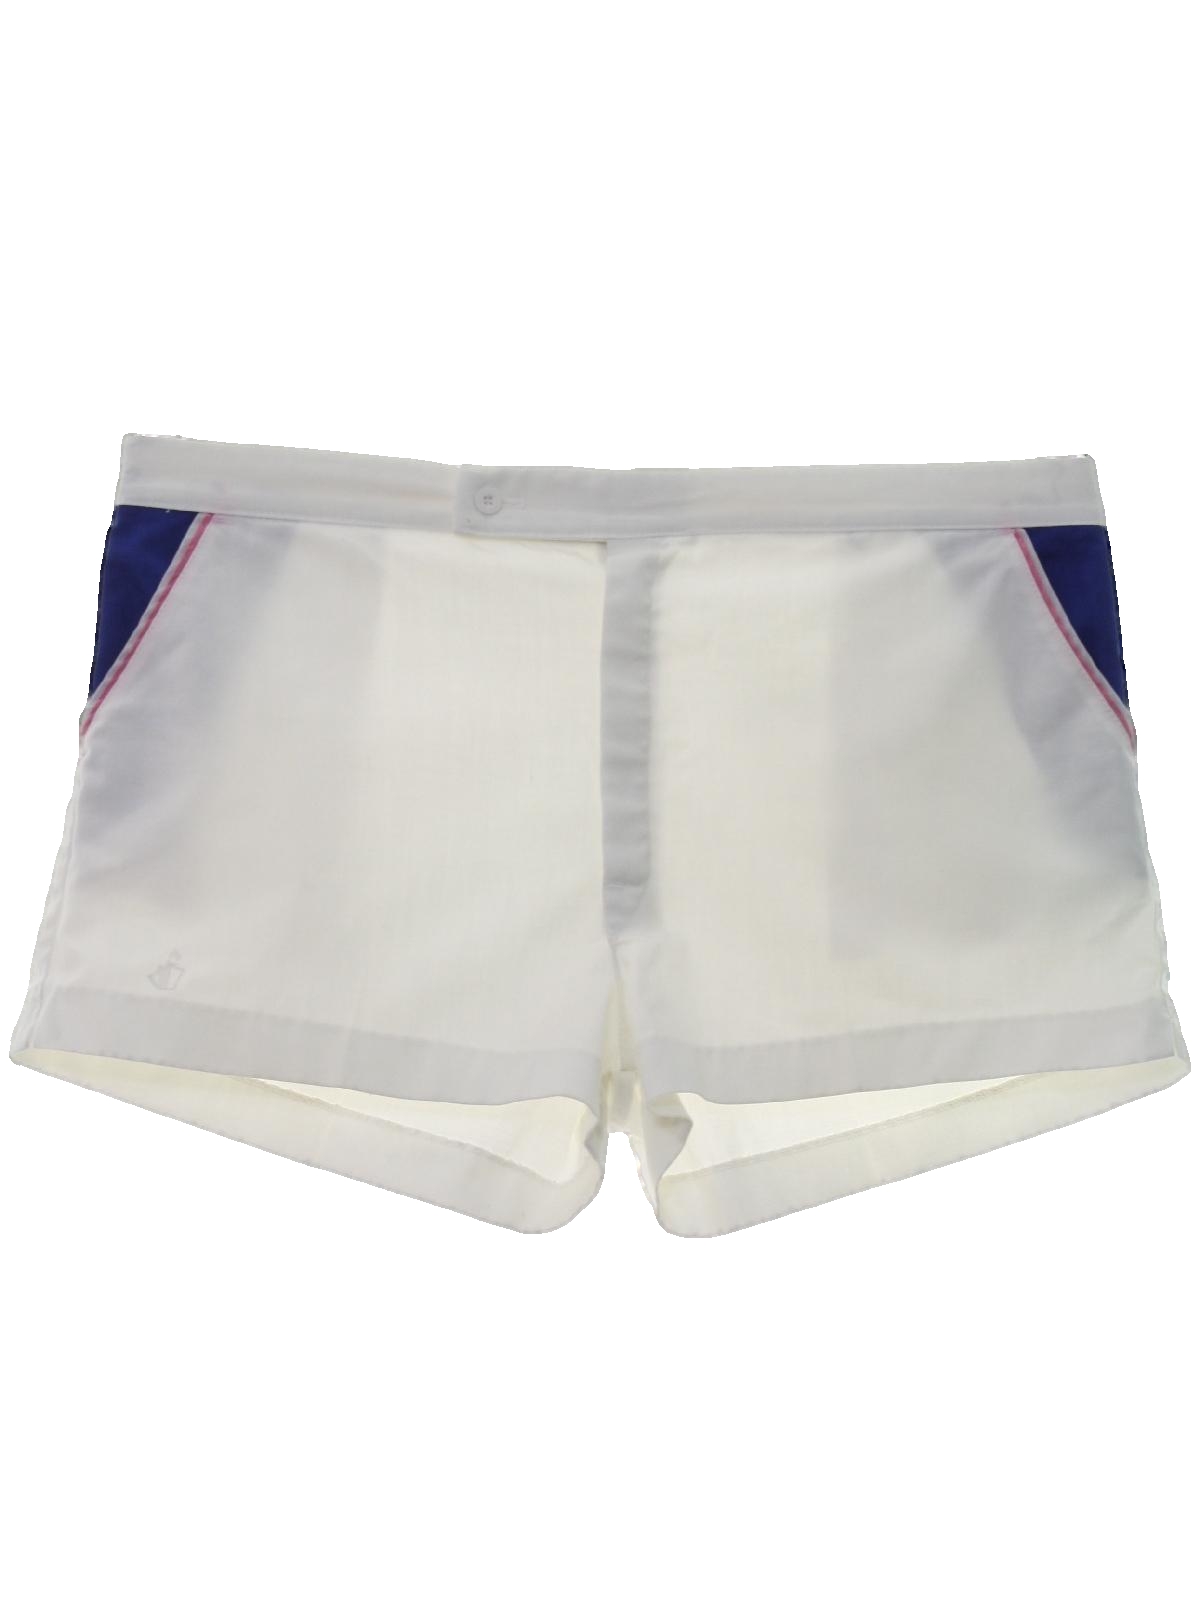 Vintage Jockey 80's Shorts: 80s -Jockey- Mens white background with ...